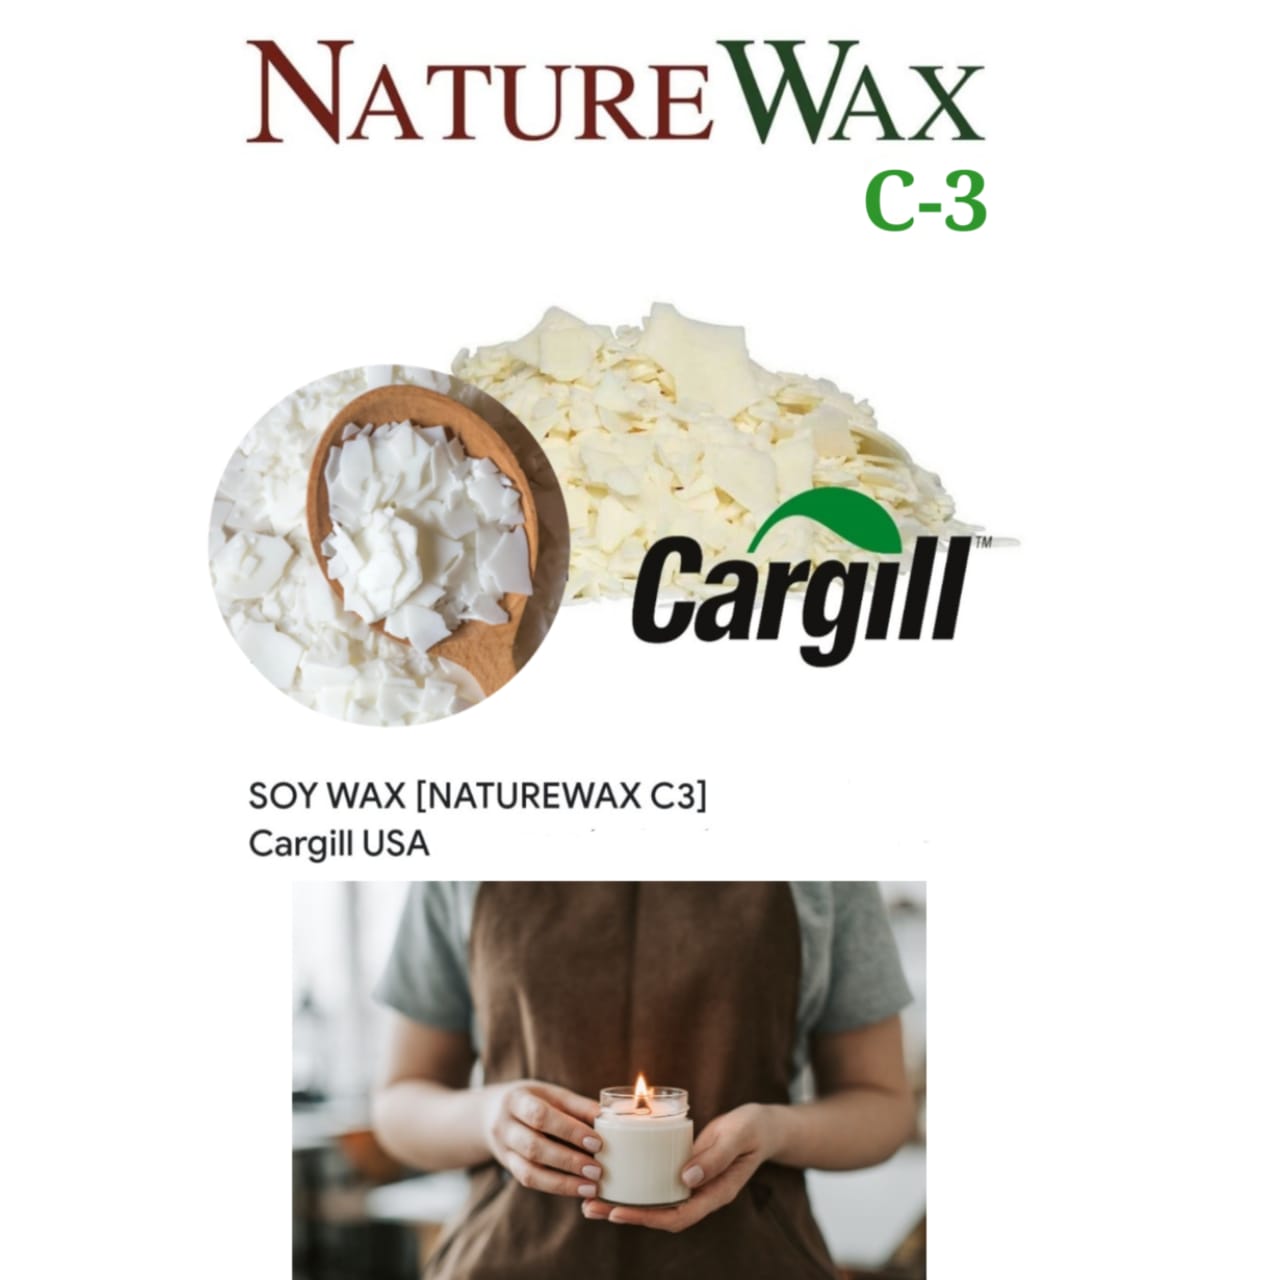 Cera di soia Cargill C3 - 100% Naturale in scaglie per candele in cont –  Bottega delle creazioni